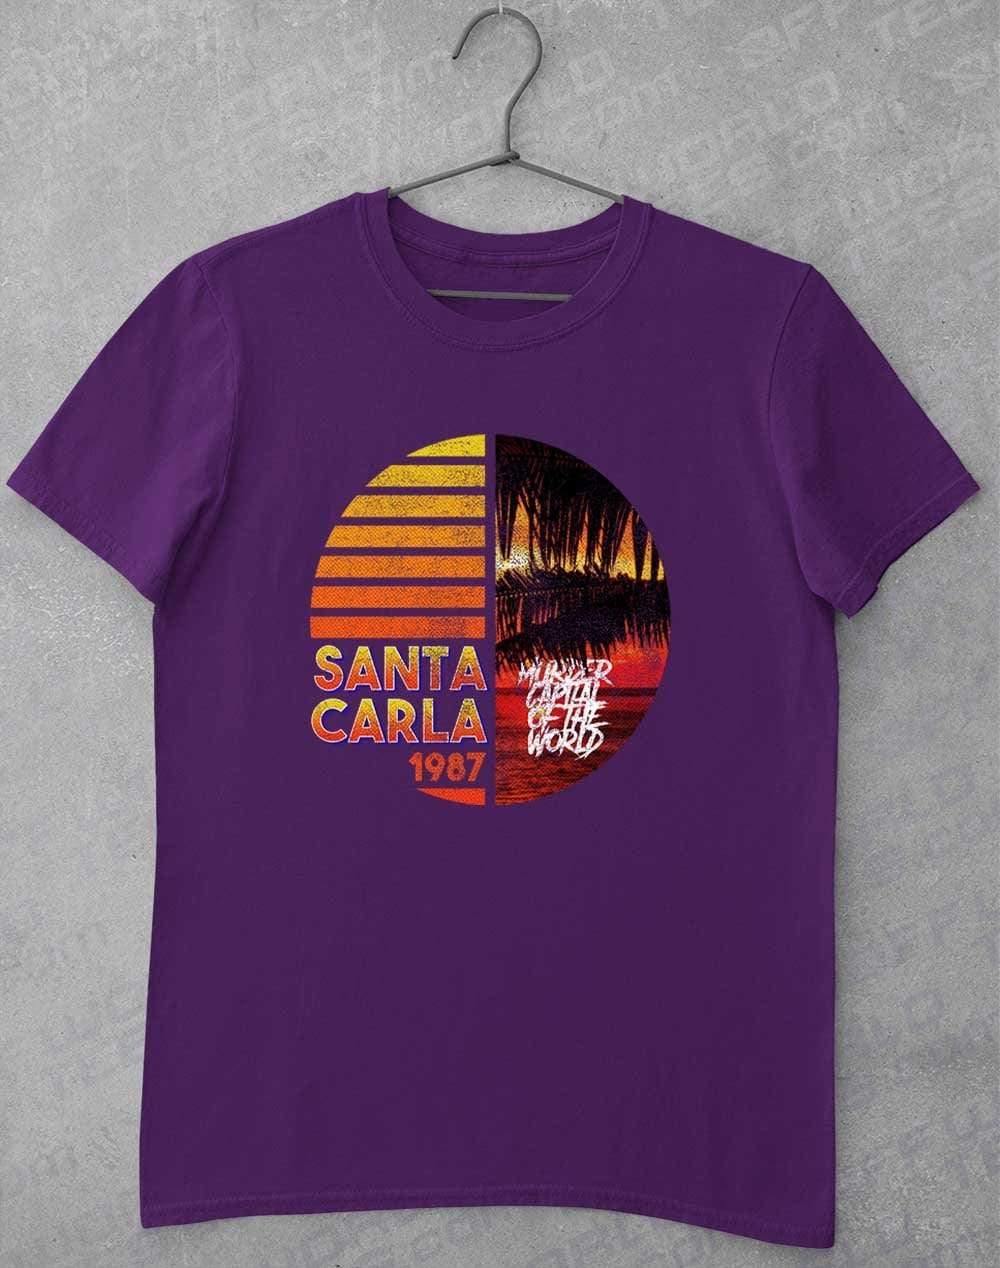 Santa Carla 1987 - T-Shirt S / Purple  - Off World Tees